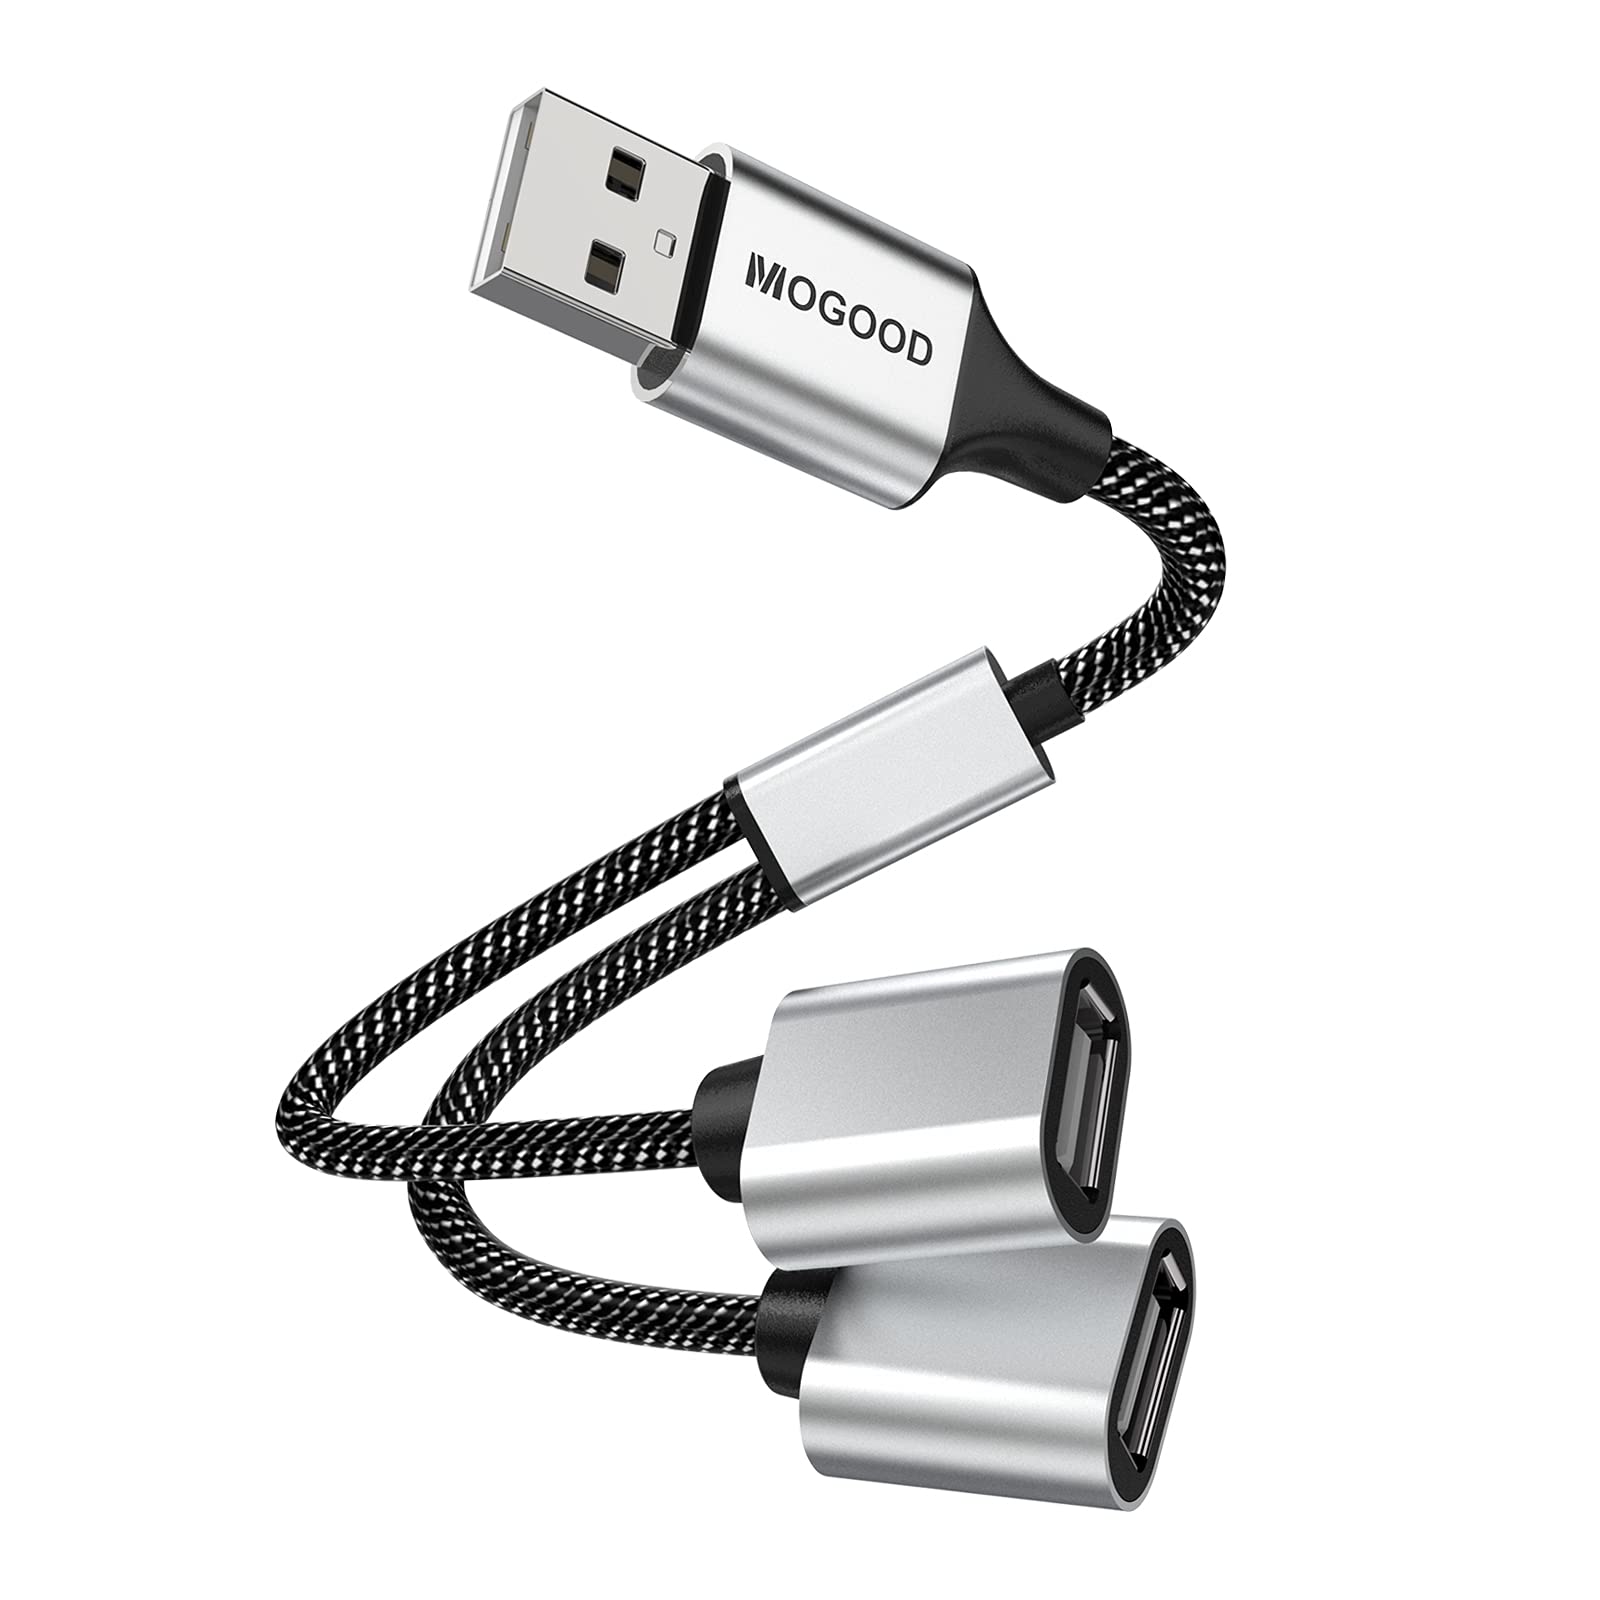 MOGOOD Câble de Splitter USB USB y Splitter USB 2.0 Charge du